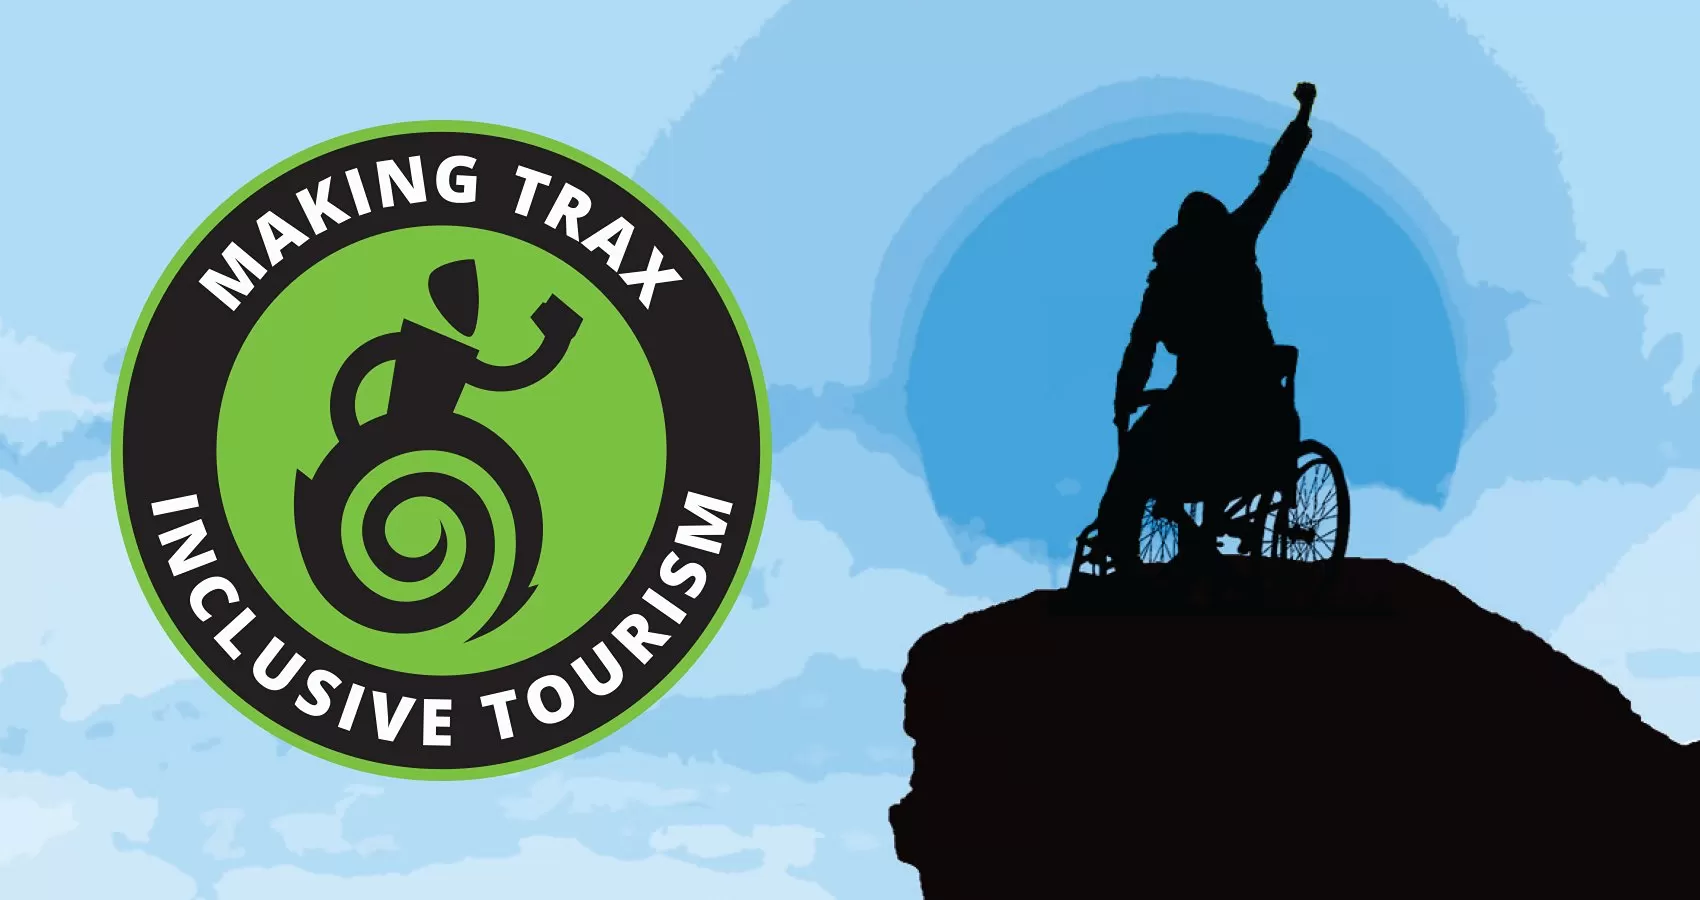 Makingtrax Inclusive Tourism logo design